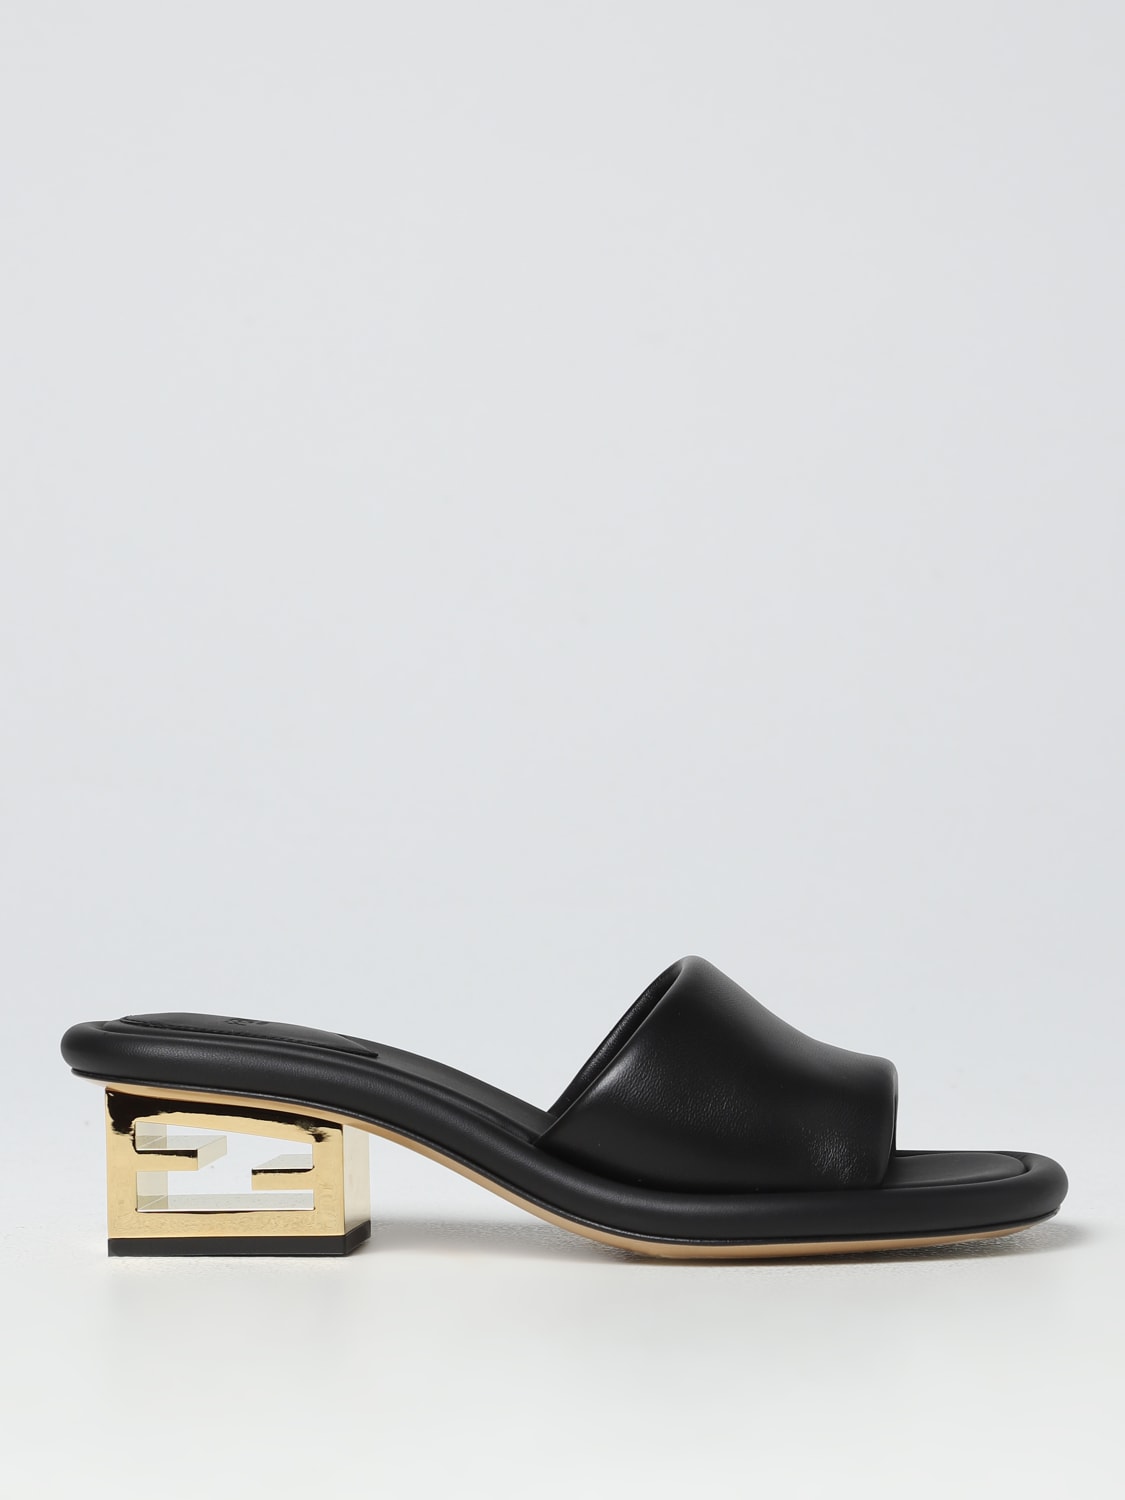 FENDI: baguette mules in nappa leather - Black | Fendi heeled 